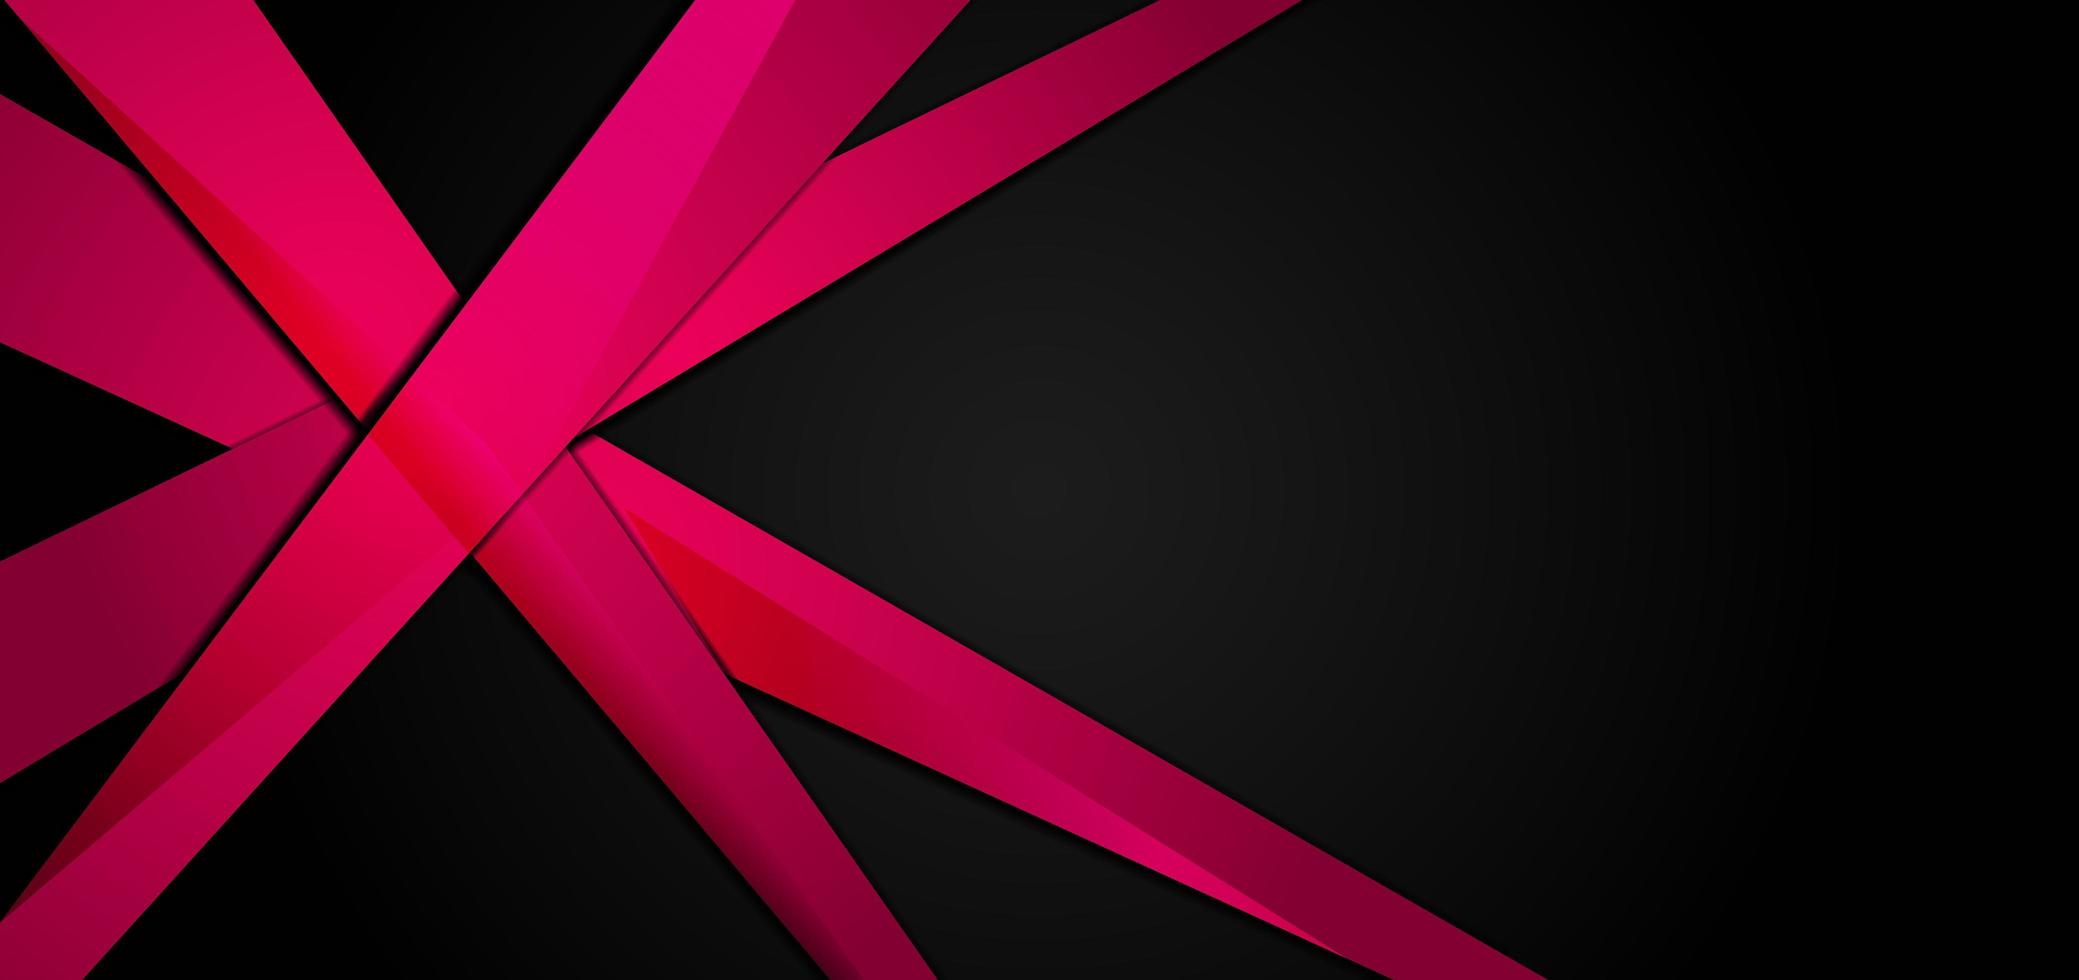 modelo de design abstrato com elementos rosa e preto vetor